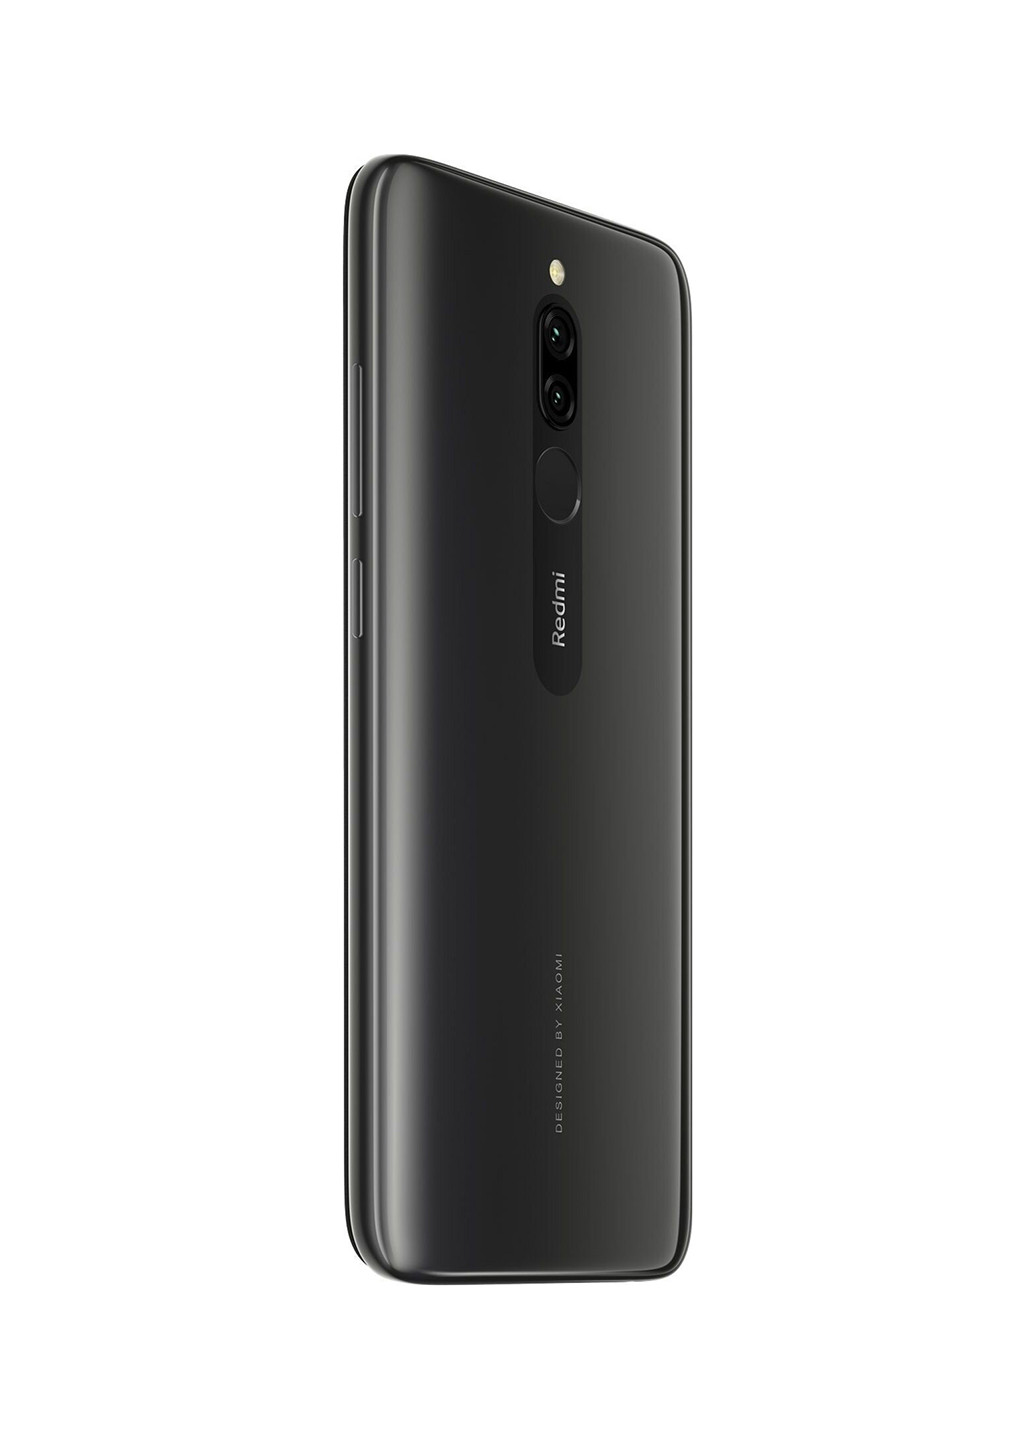 Смартфон Redmi 8 3 / 32GB Onyx Black Xiaomi redmi 8 3/32gb onyx black (156216192)